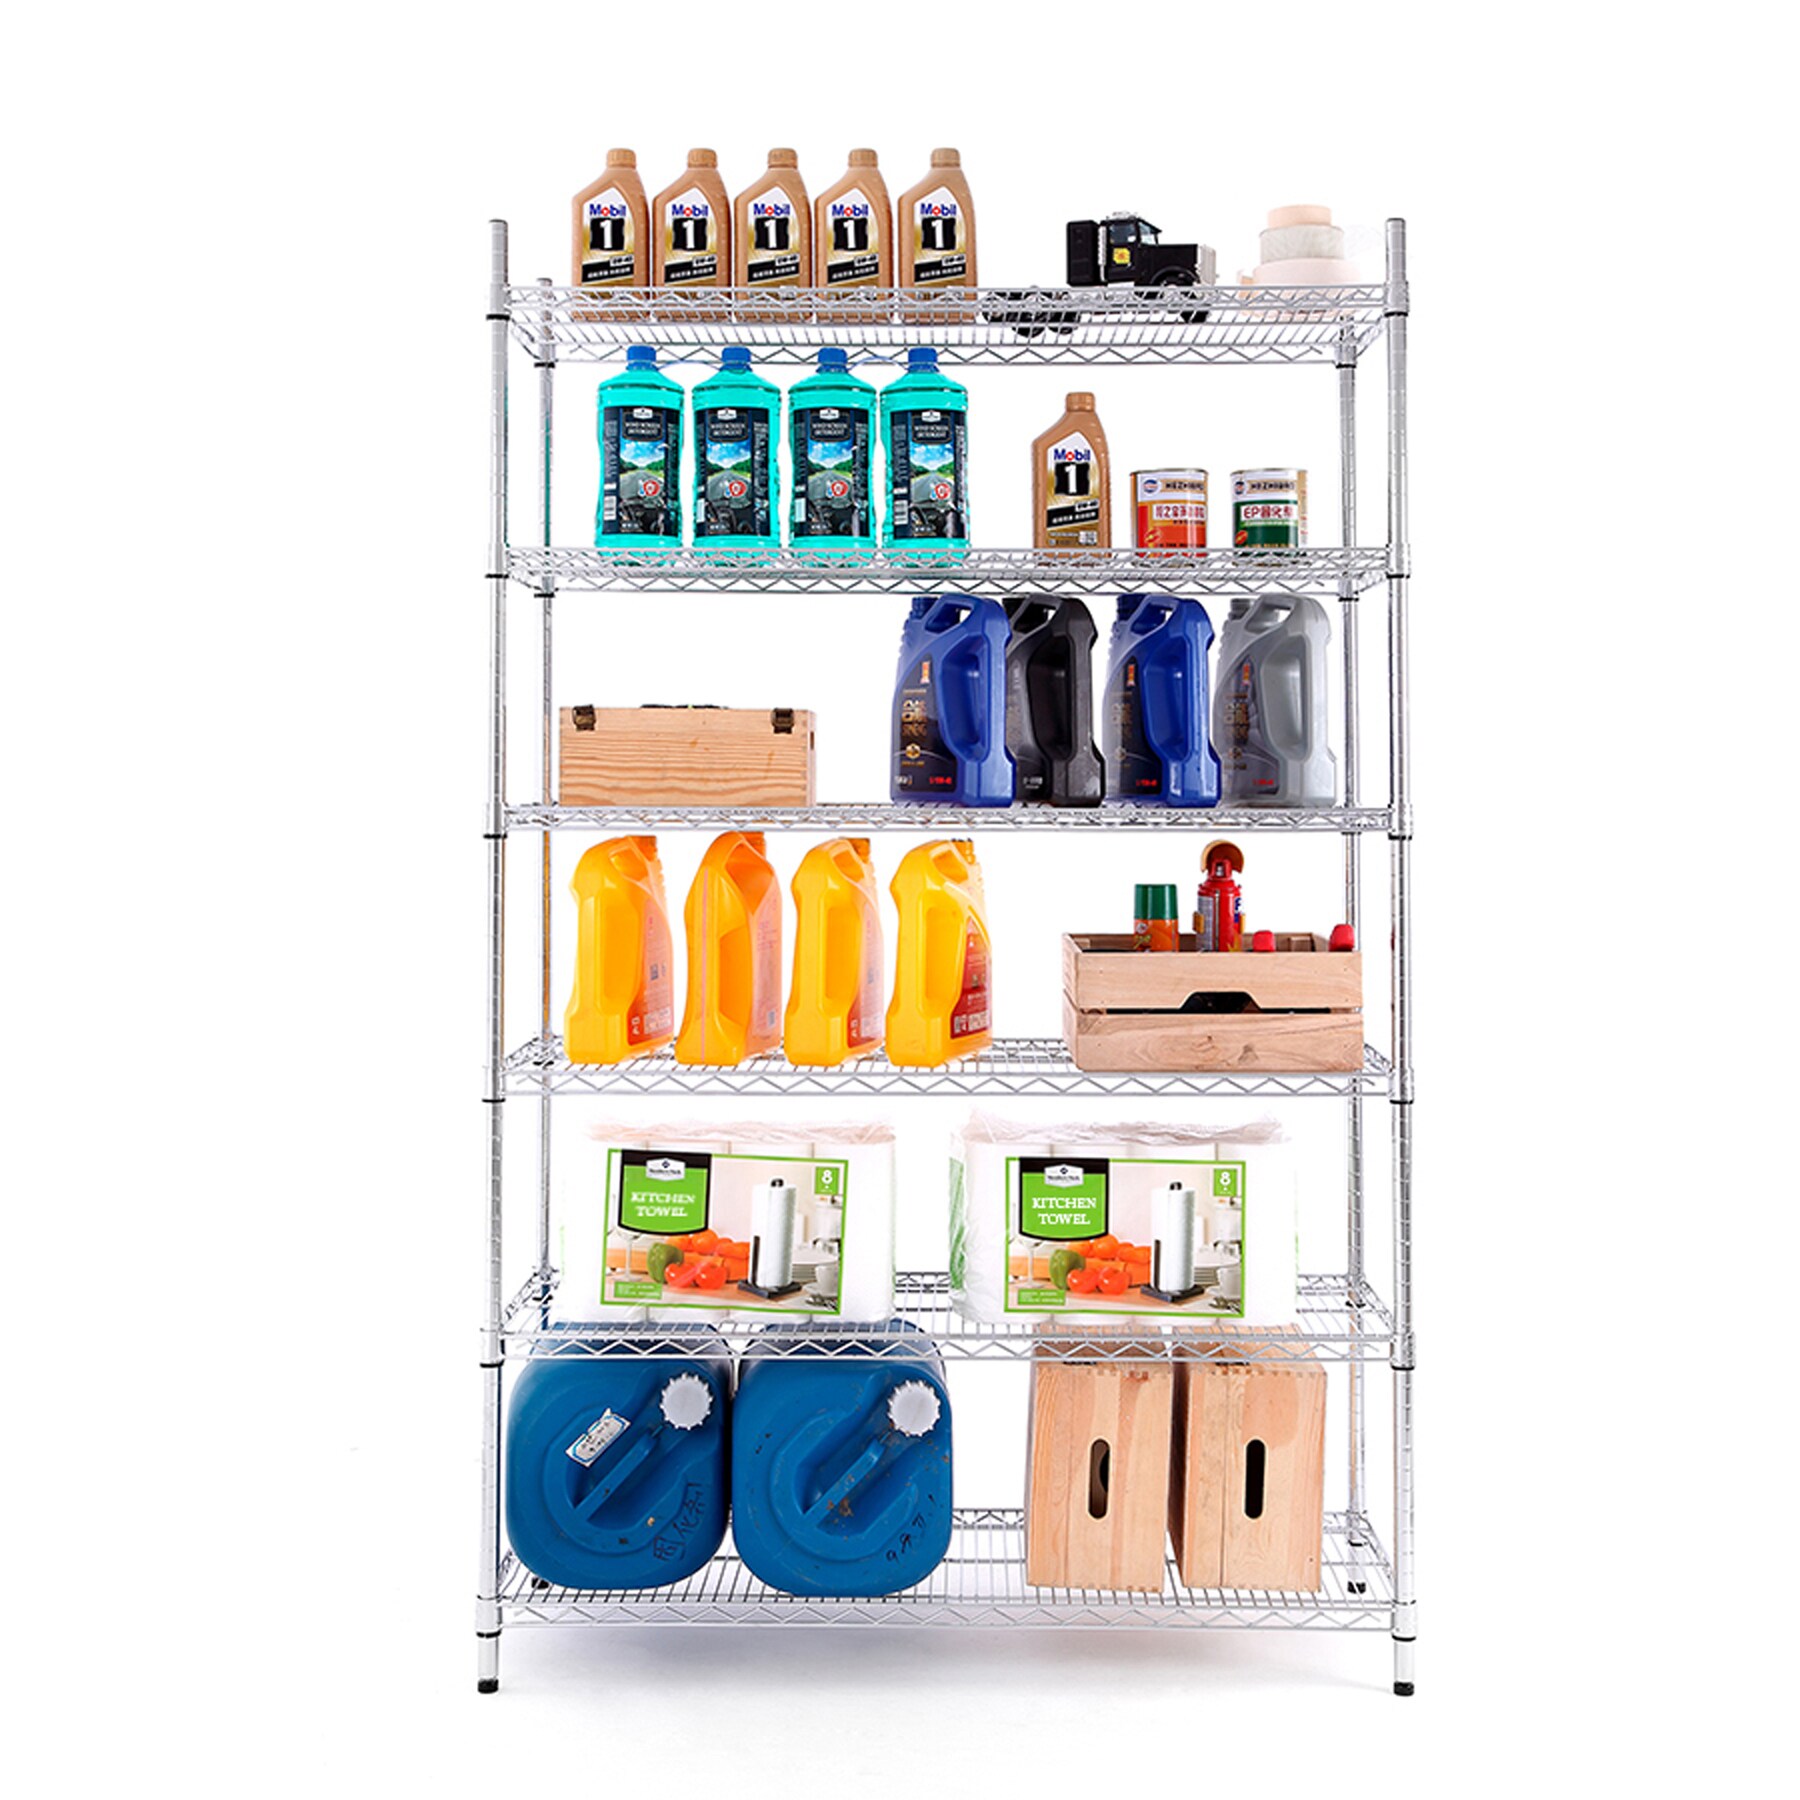 Stainless Steel Rectangular Kitchen Storage Rack, Shelves: 6,  Size/Dimensions: Standard